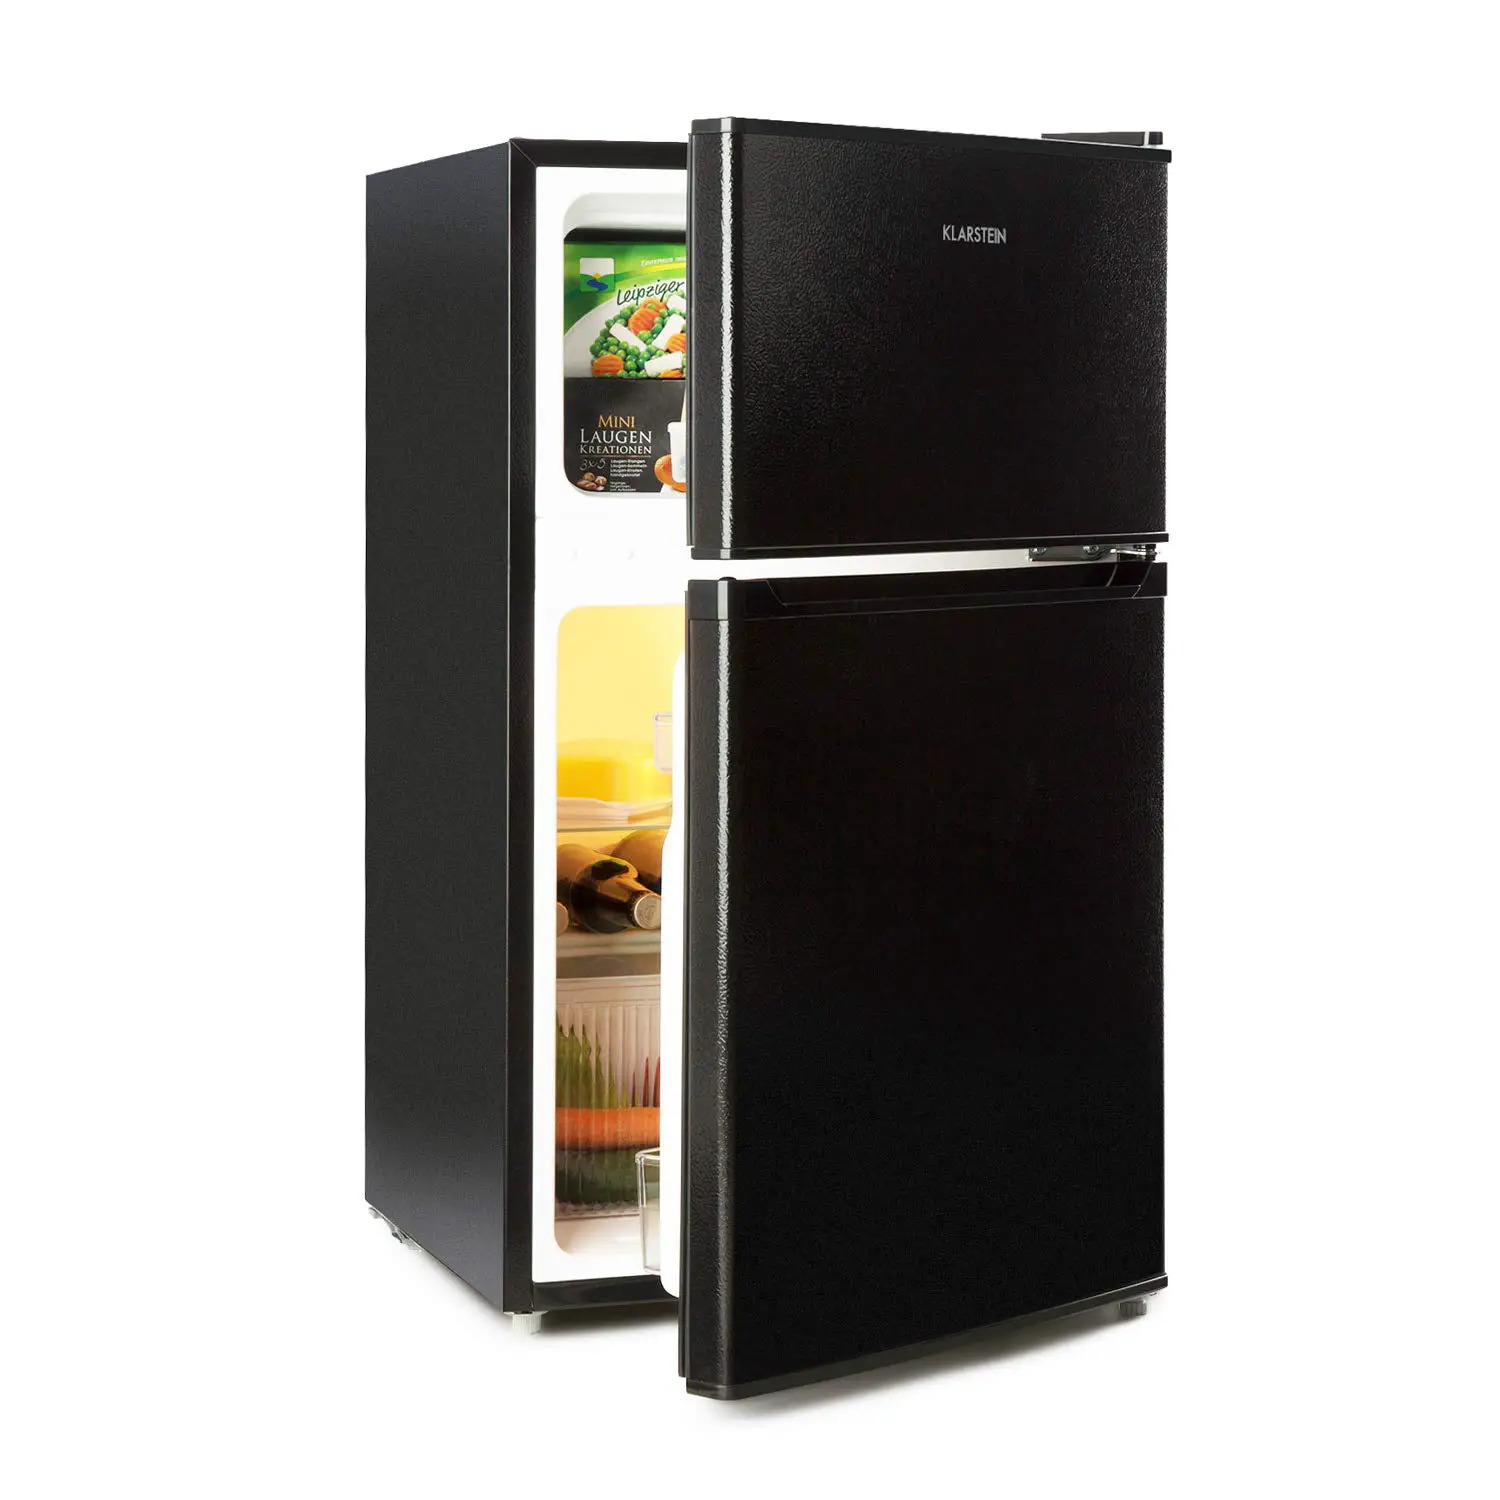 Big Daddy Cool Freezer Refrigerator